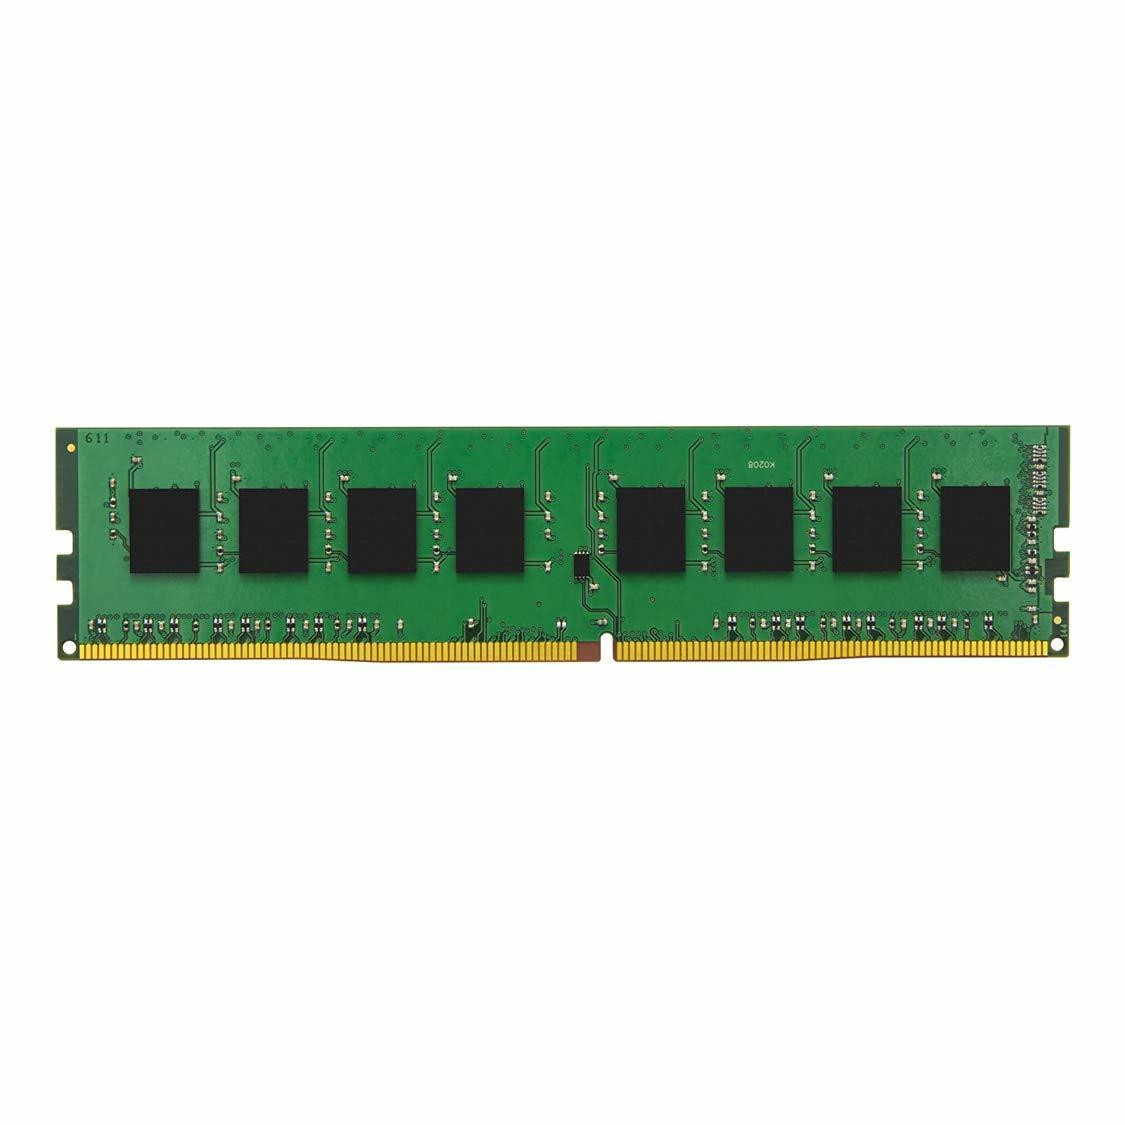 Kingston ValueRam 16GB DDR4-3200 dual sided